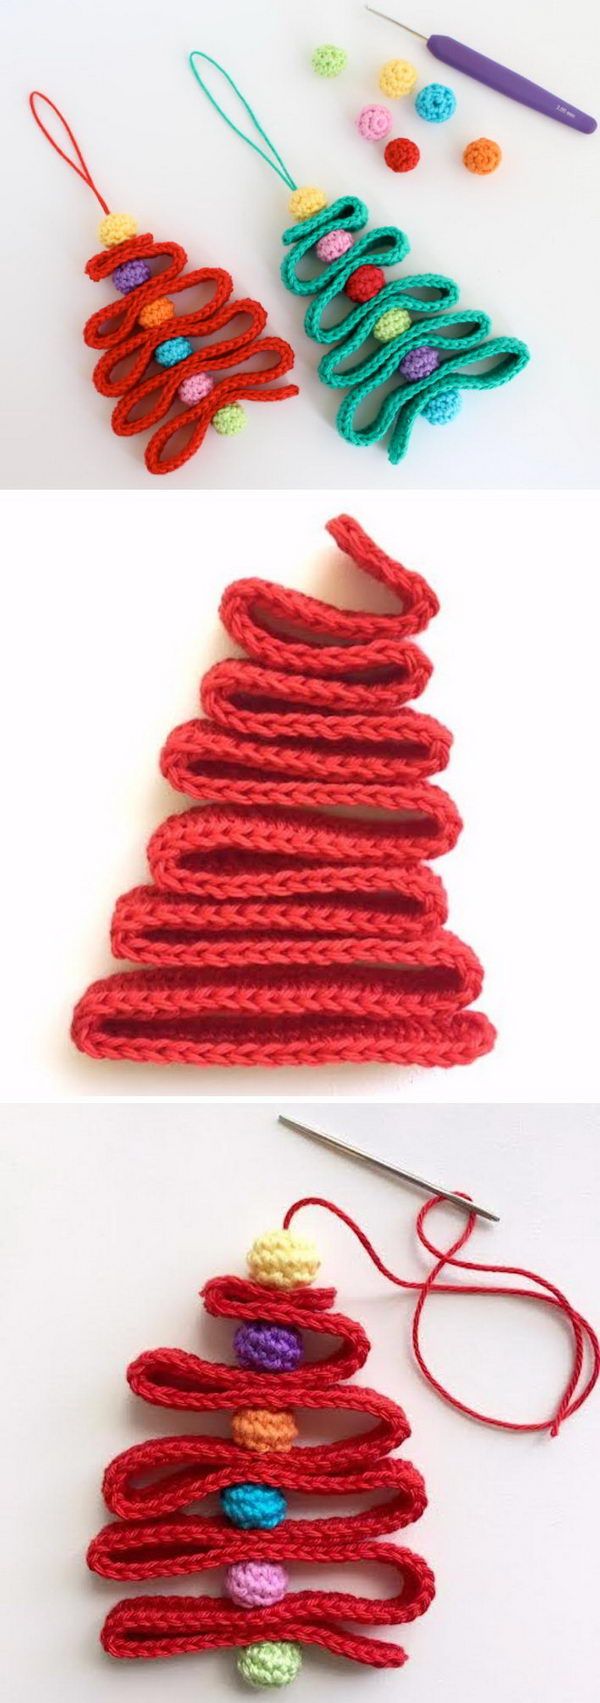 25+ Free Christmas Crochet Patterns For Beginners